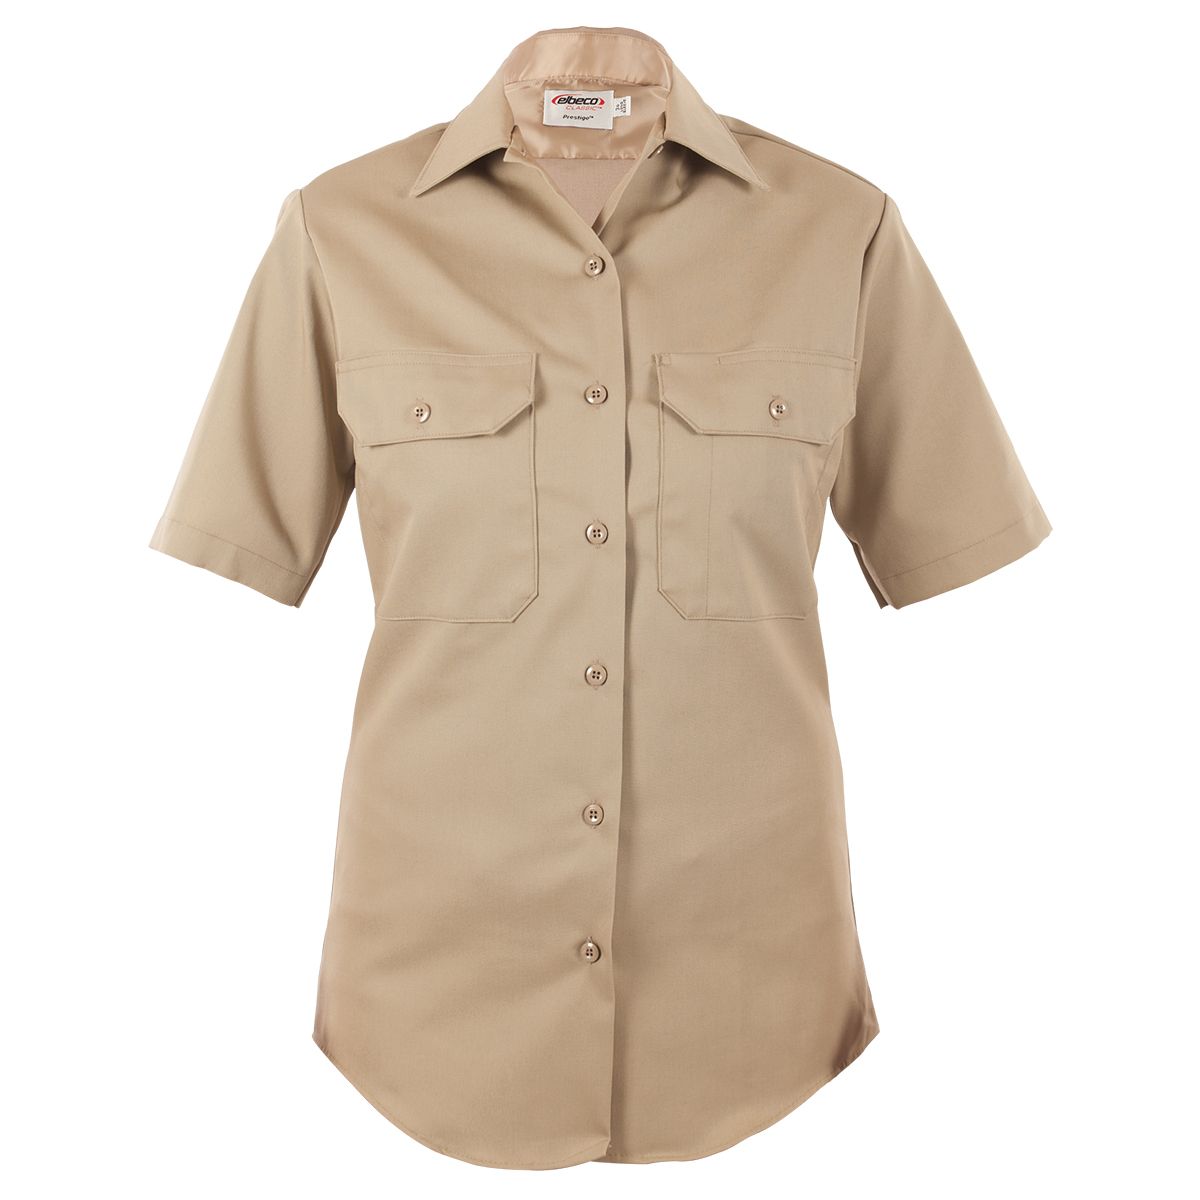 LA County Sheriff/West Coast Short Sleeve Shirt-Womens-